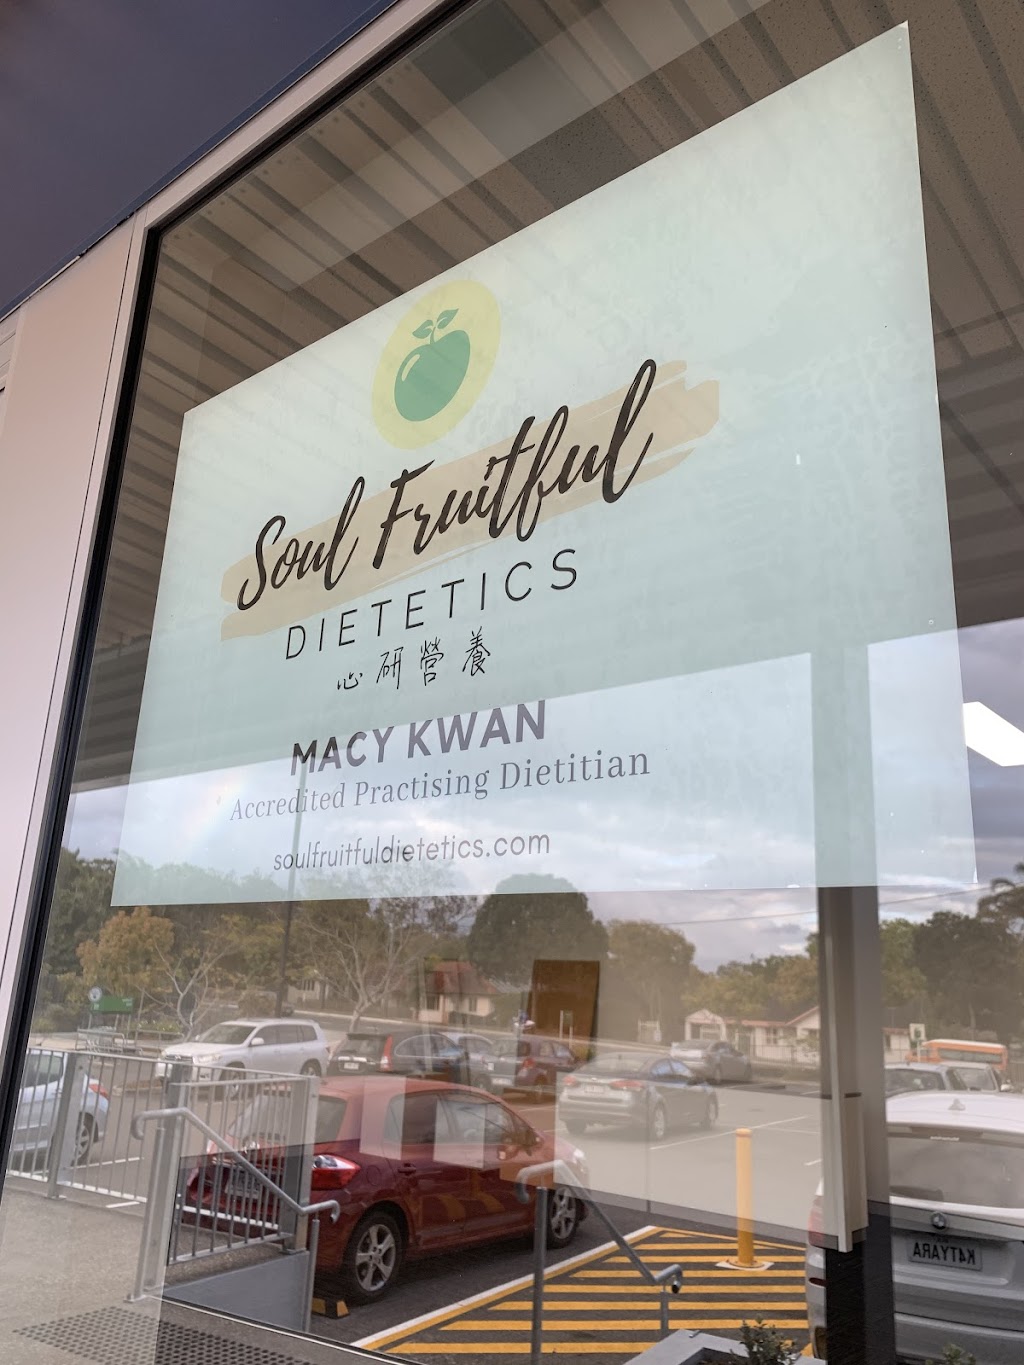 Soul Fruitful Dietetics 心研營養 Macy Kwan APD | 511 Archerfield Rd, Richlands QLD 4077, Australia | Phone: 0426 054 154